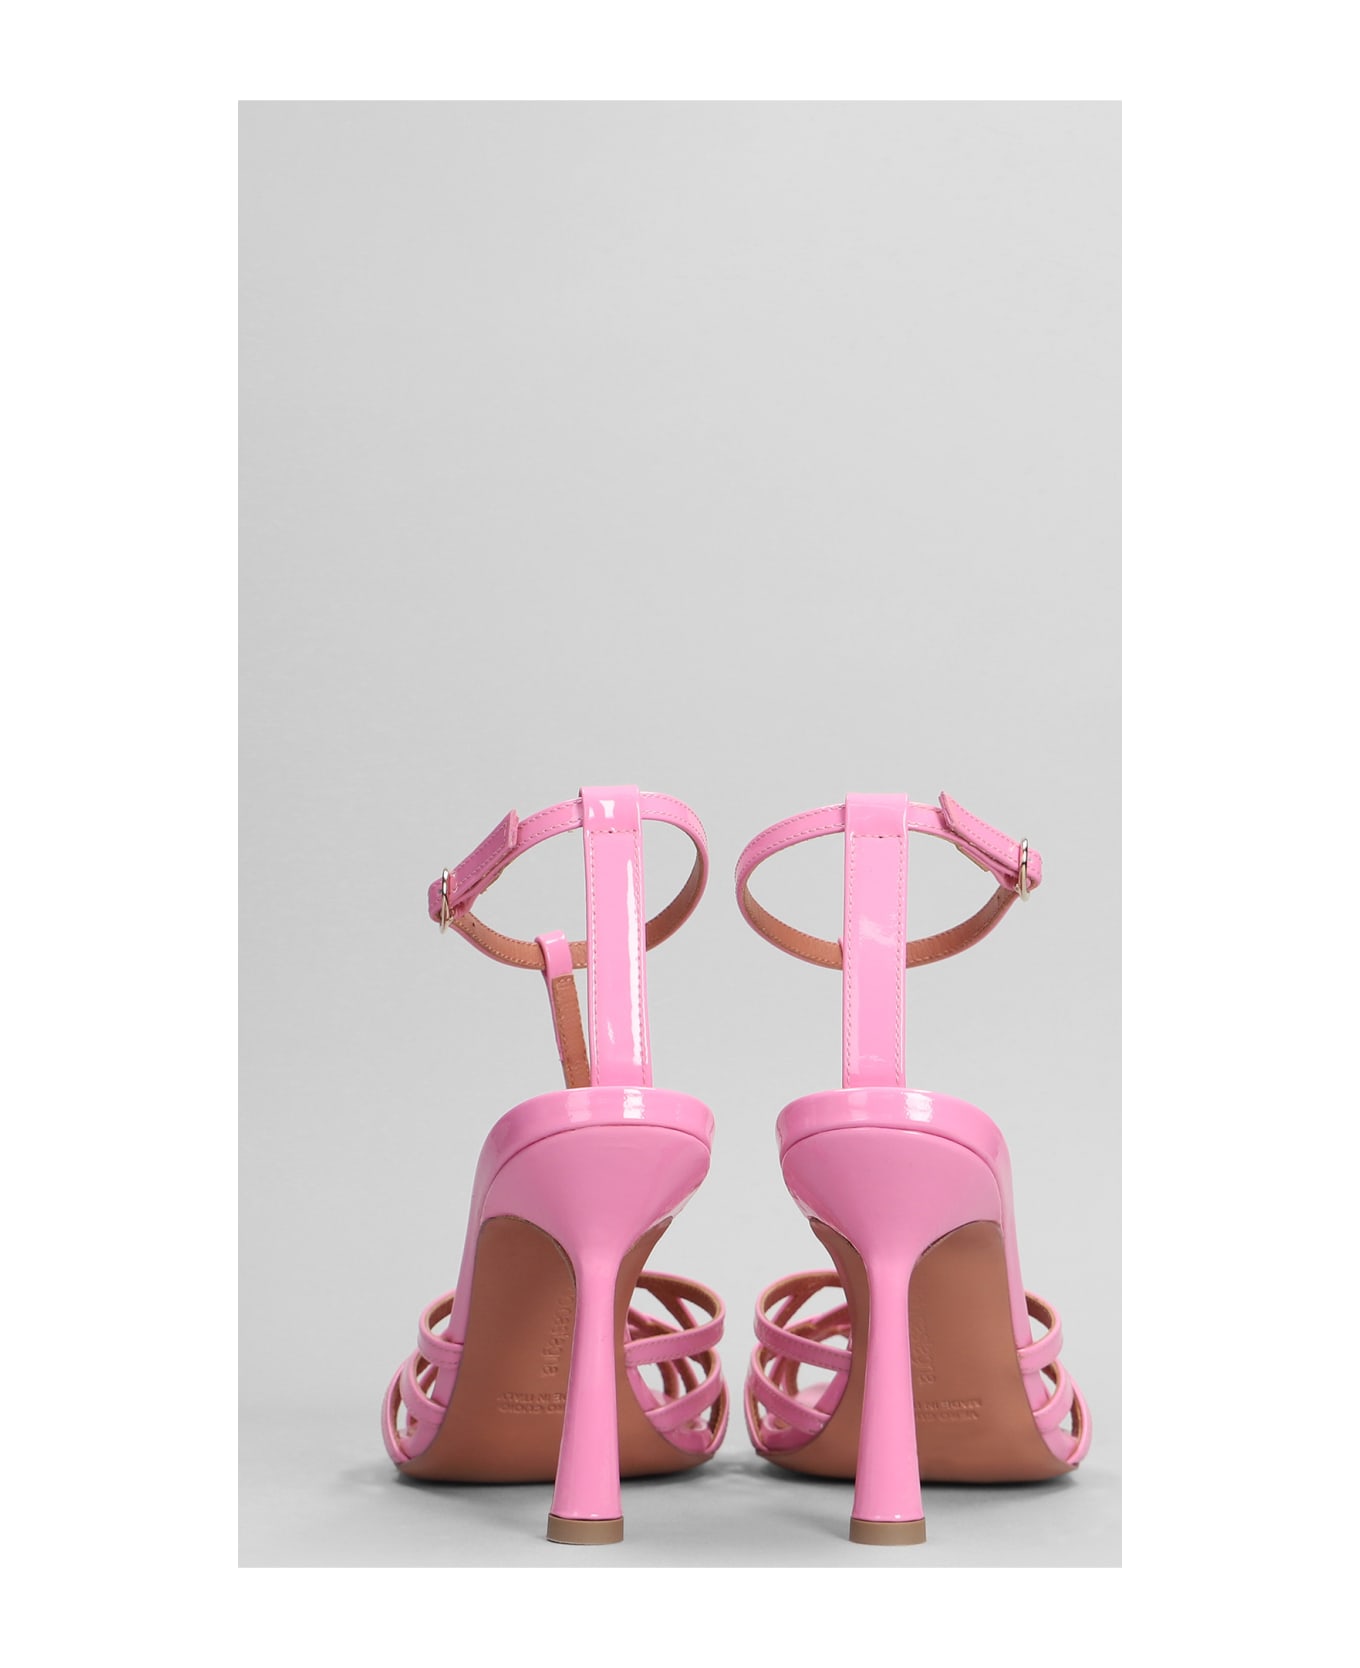 Aldo Castagna Lidia Sandals In Rose-pink Patent Leather - rose-pink